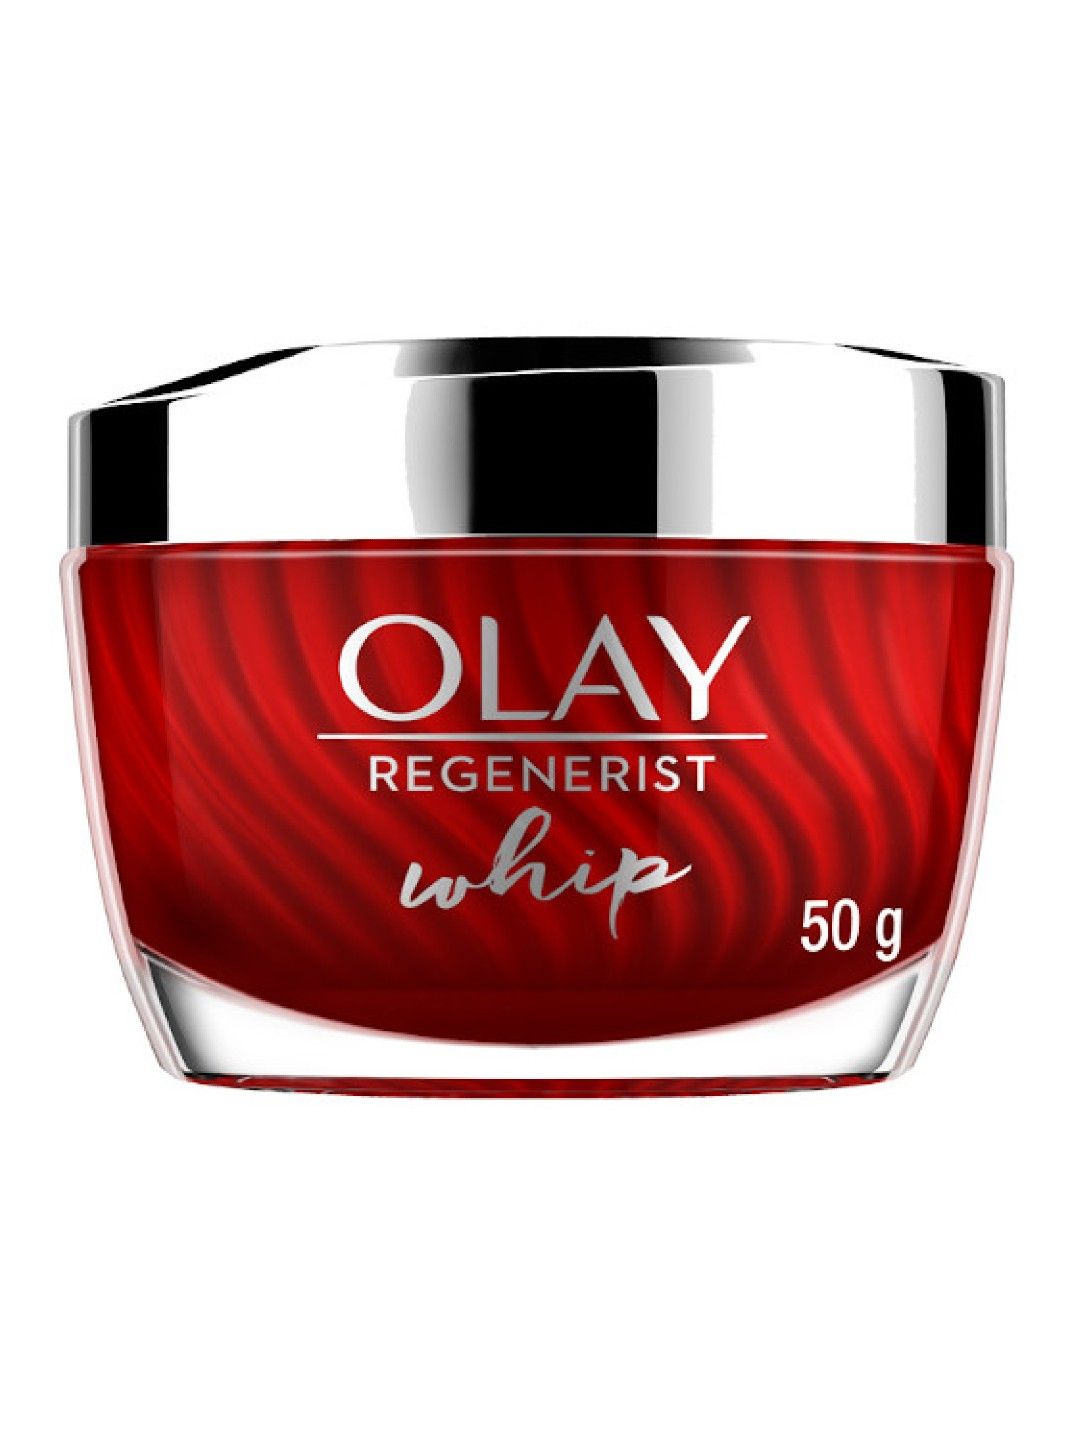 Olay Regenerist Whip (50g) (No Color- Image 1)